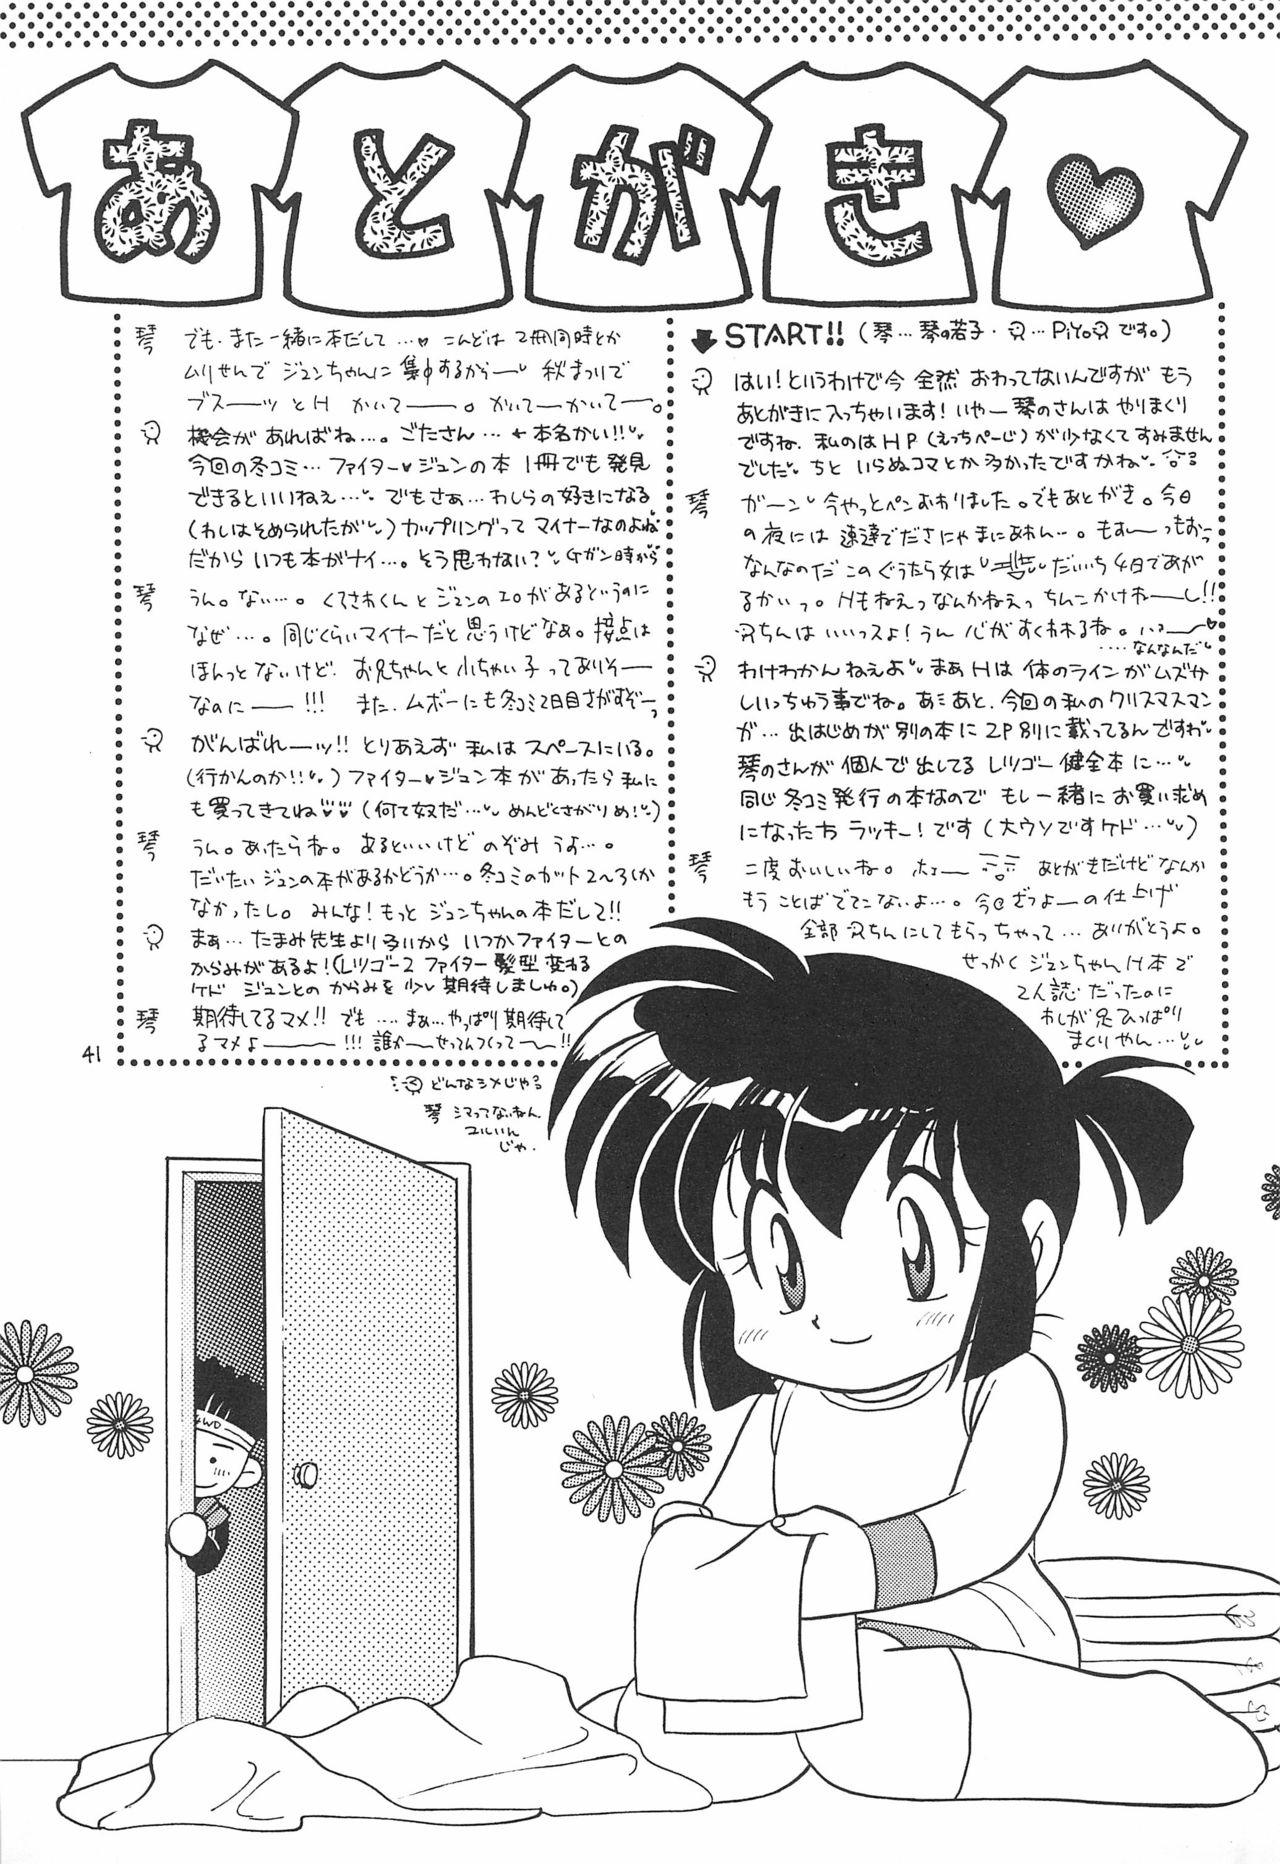 Soapy Sentakuya Fighter - Bakusou kyoudai lets and go Penis - Page 41